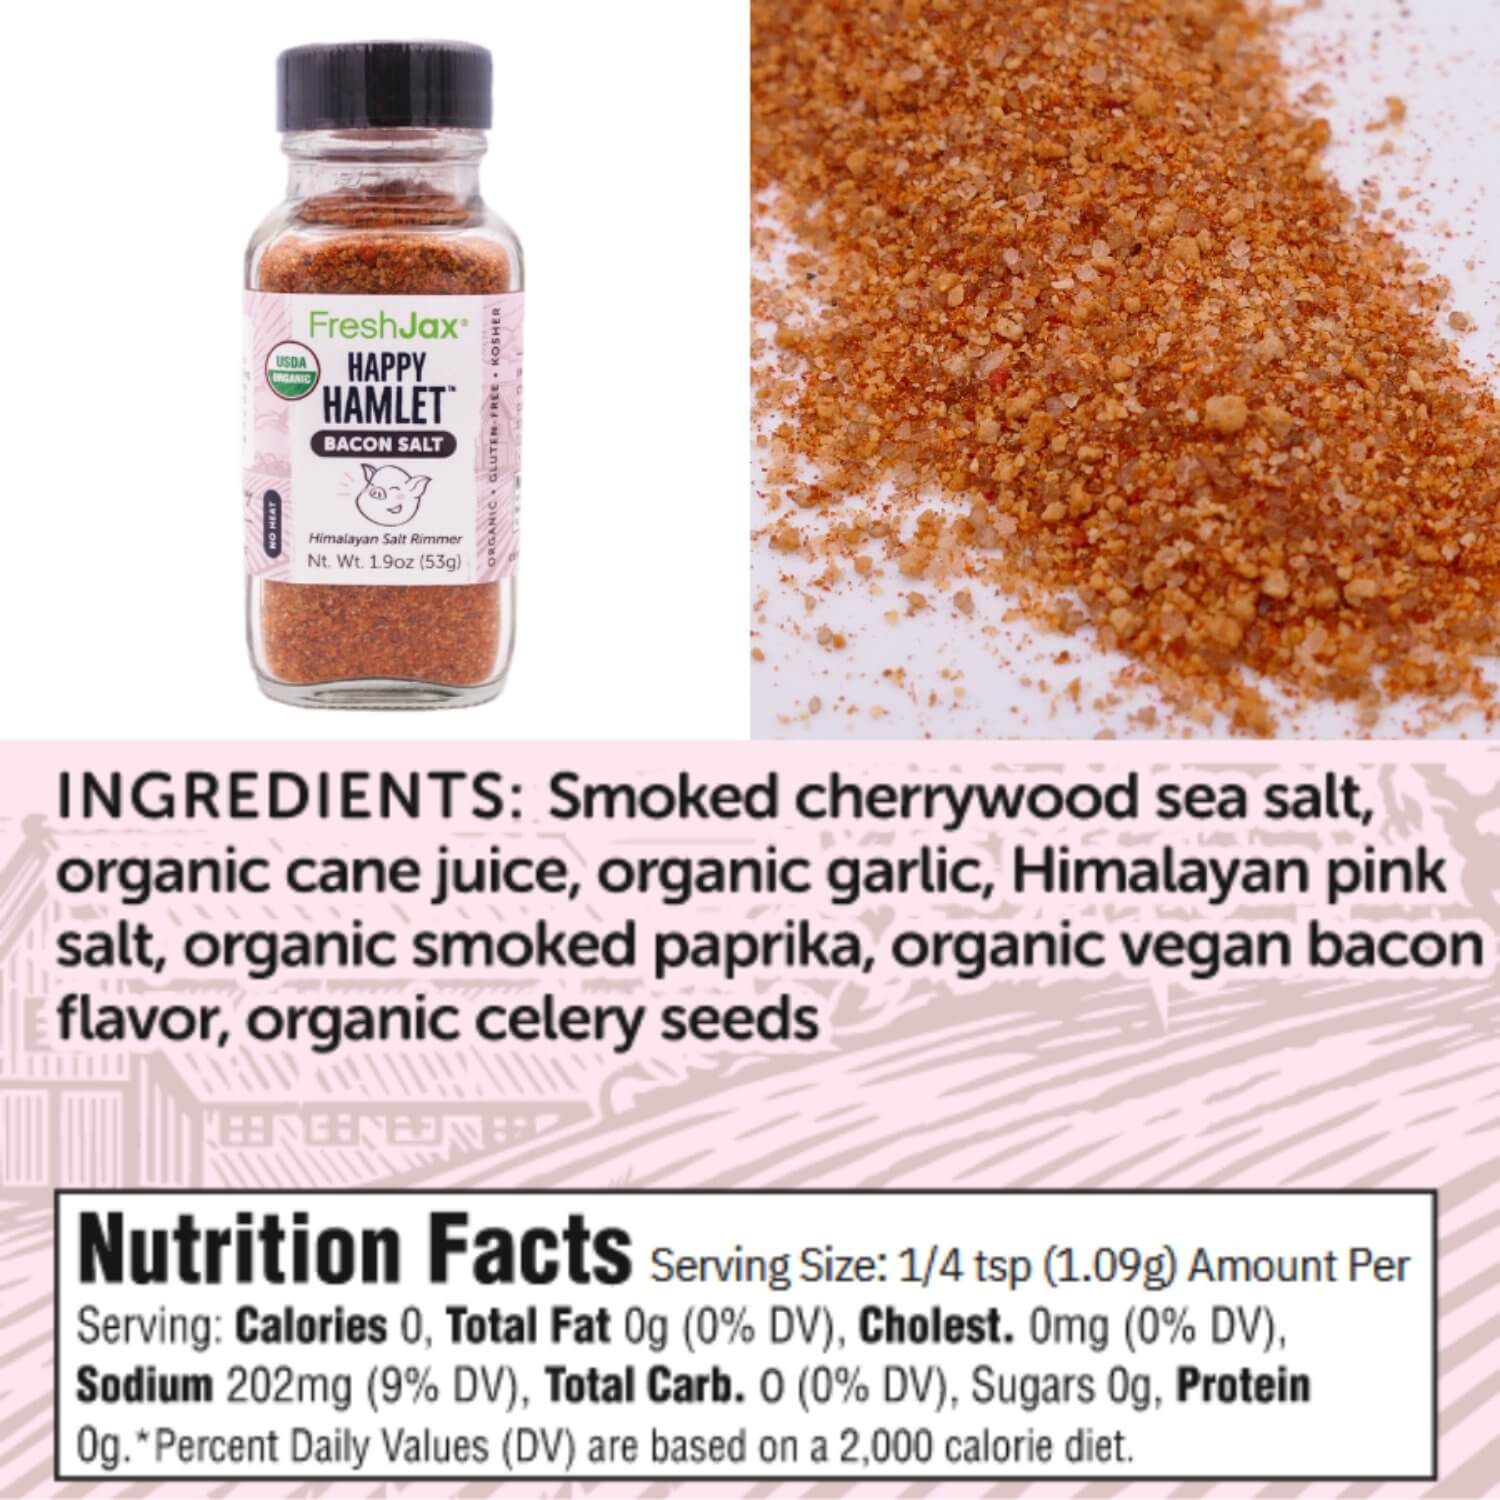 FreshJax Organic Spices Happy Hamlet Vegan Bacon Salt Ingredient and Nutritional Information